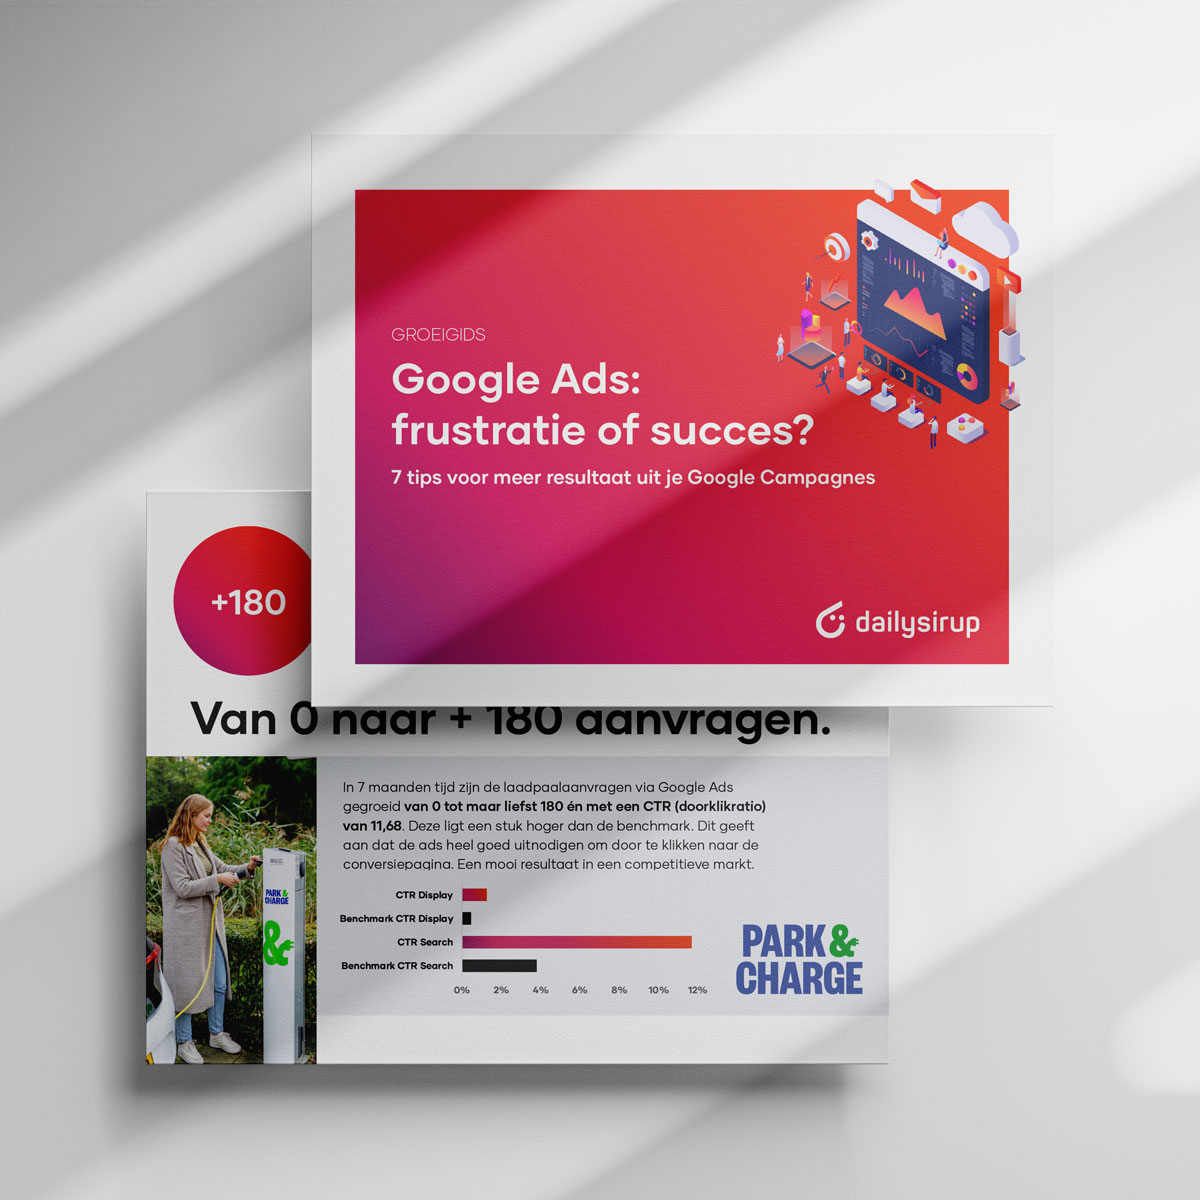 groeigids-google-ads